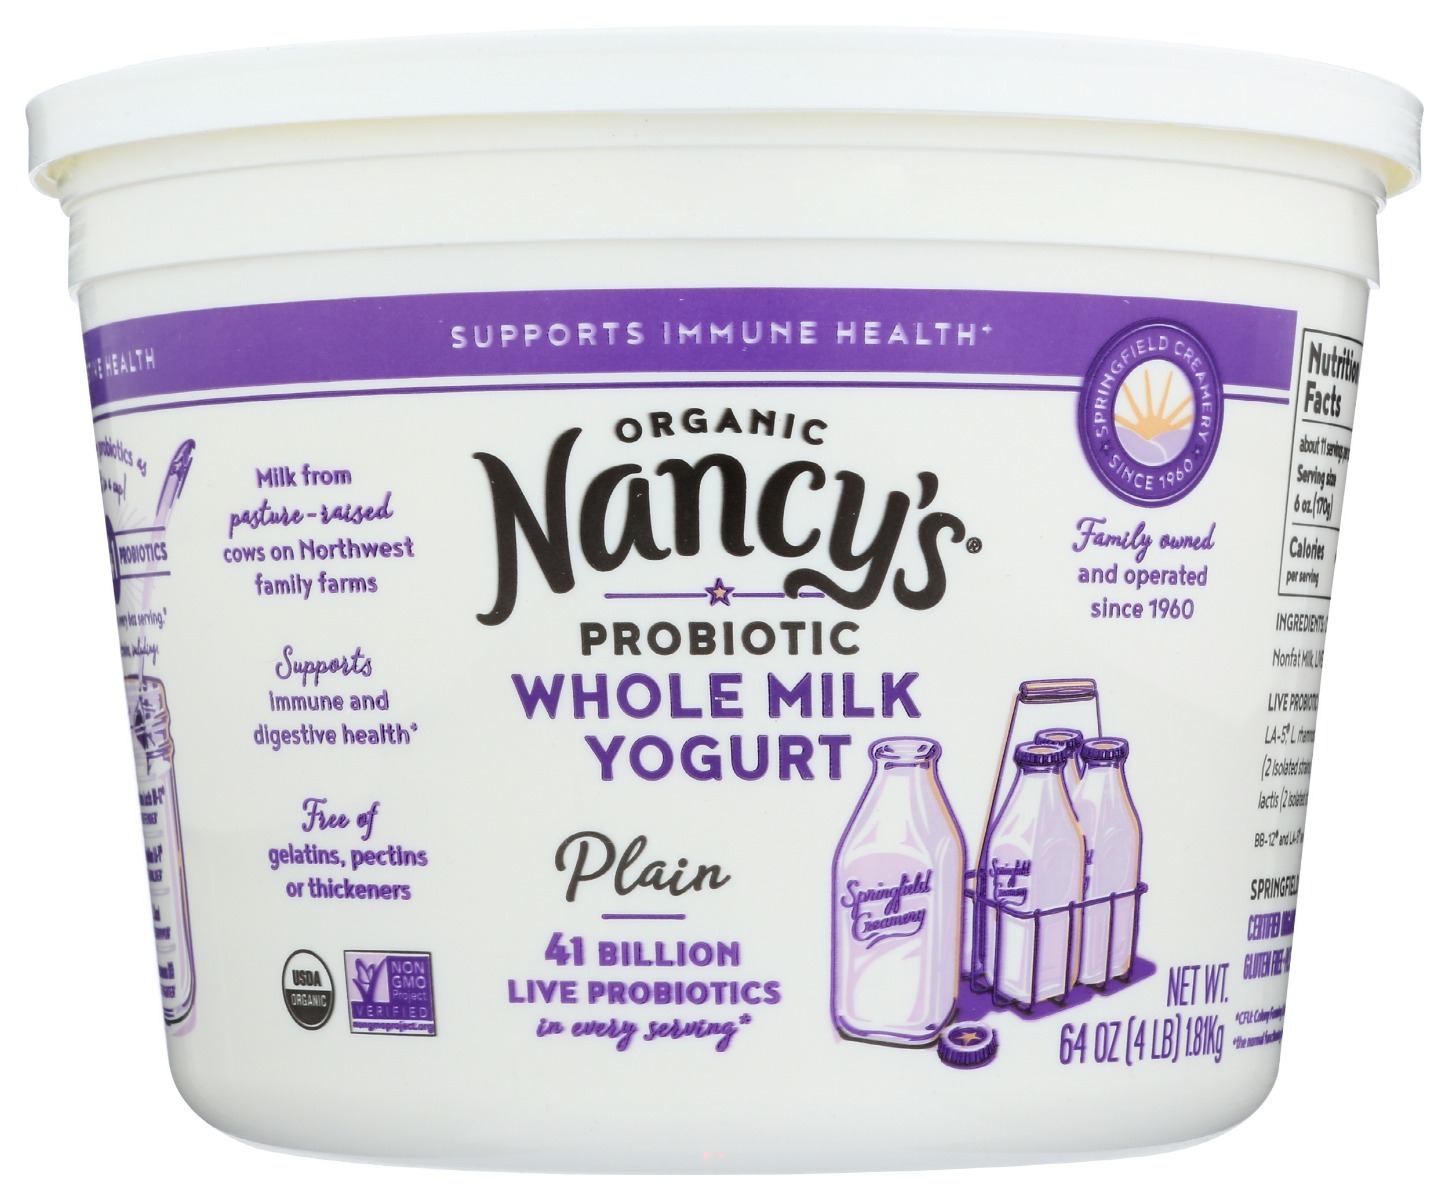 Plain Organic Probiotic Whole Milk Yogurt, Plain - quaker